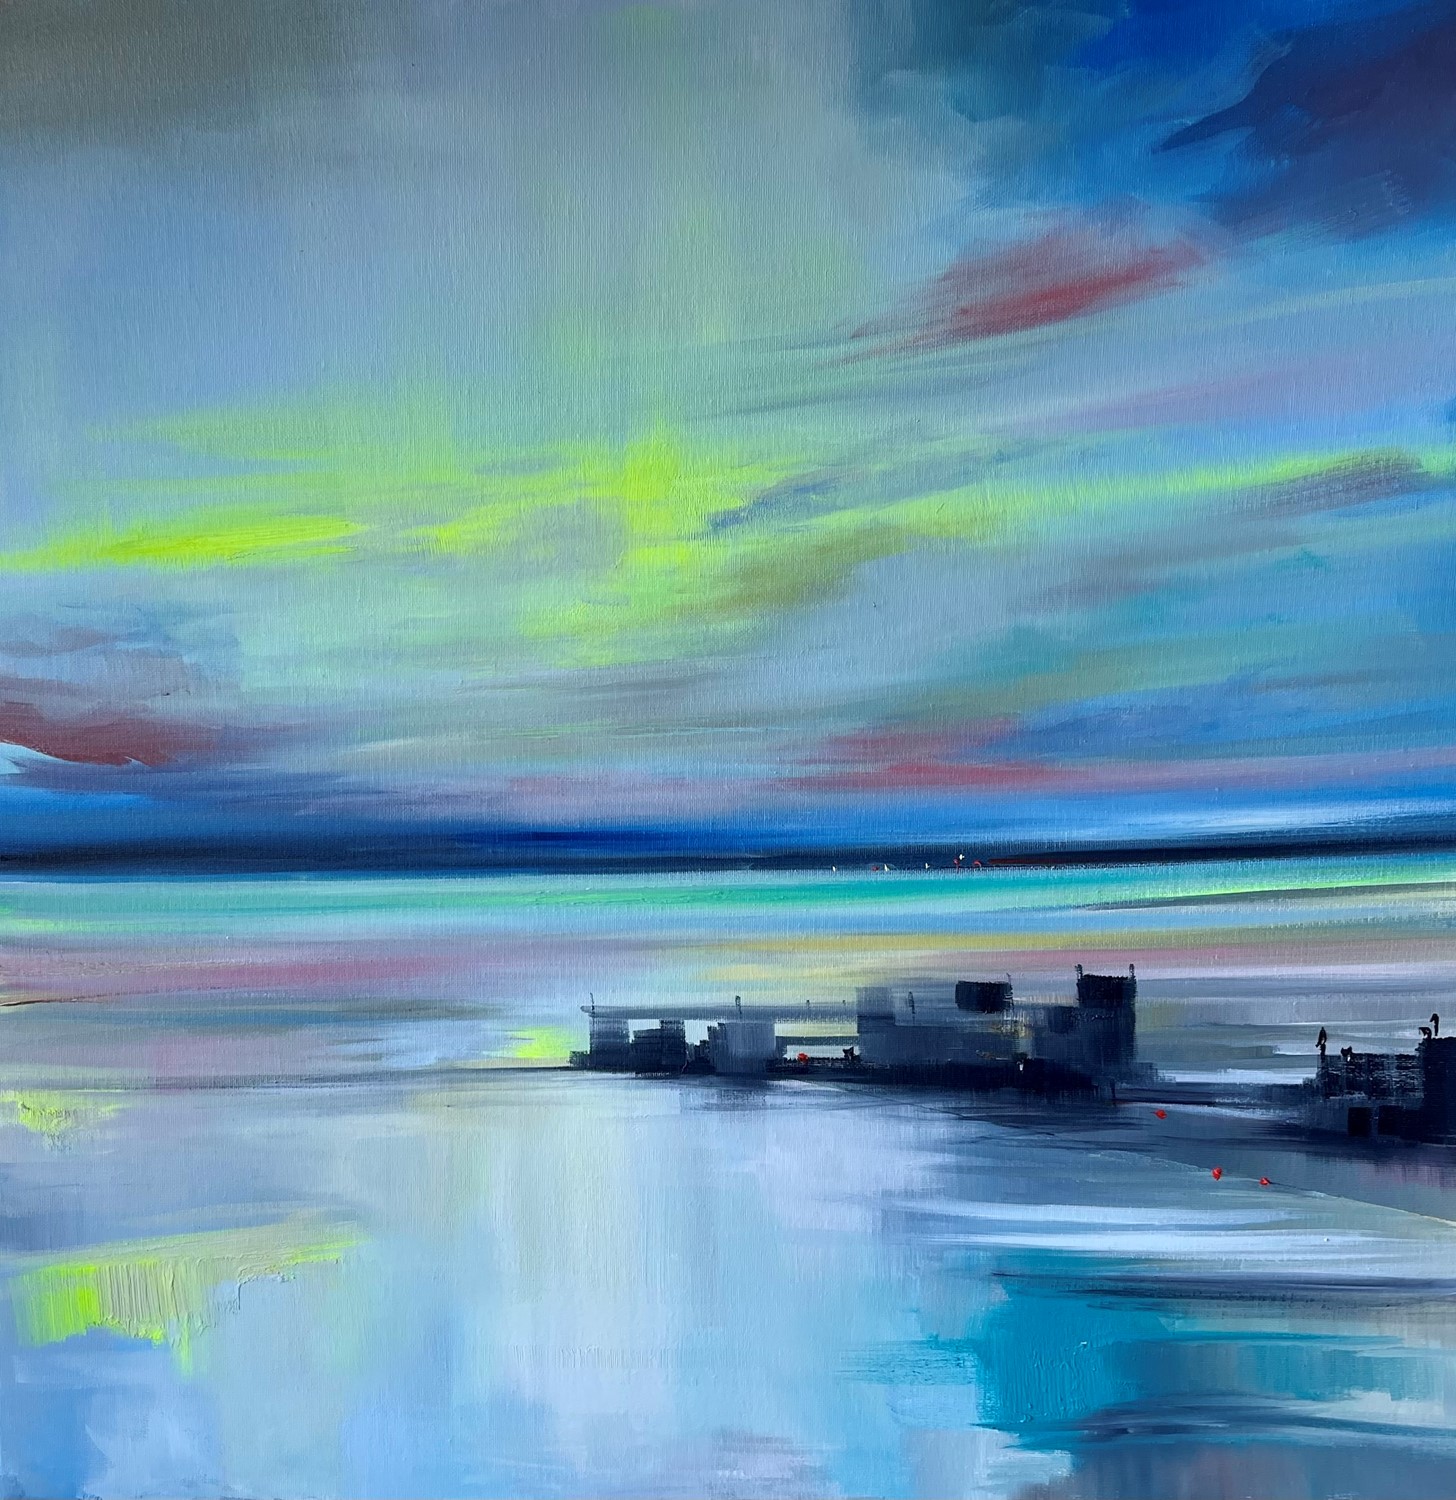 'The Aurora Up North' by artist Rosanne Barr